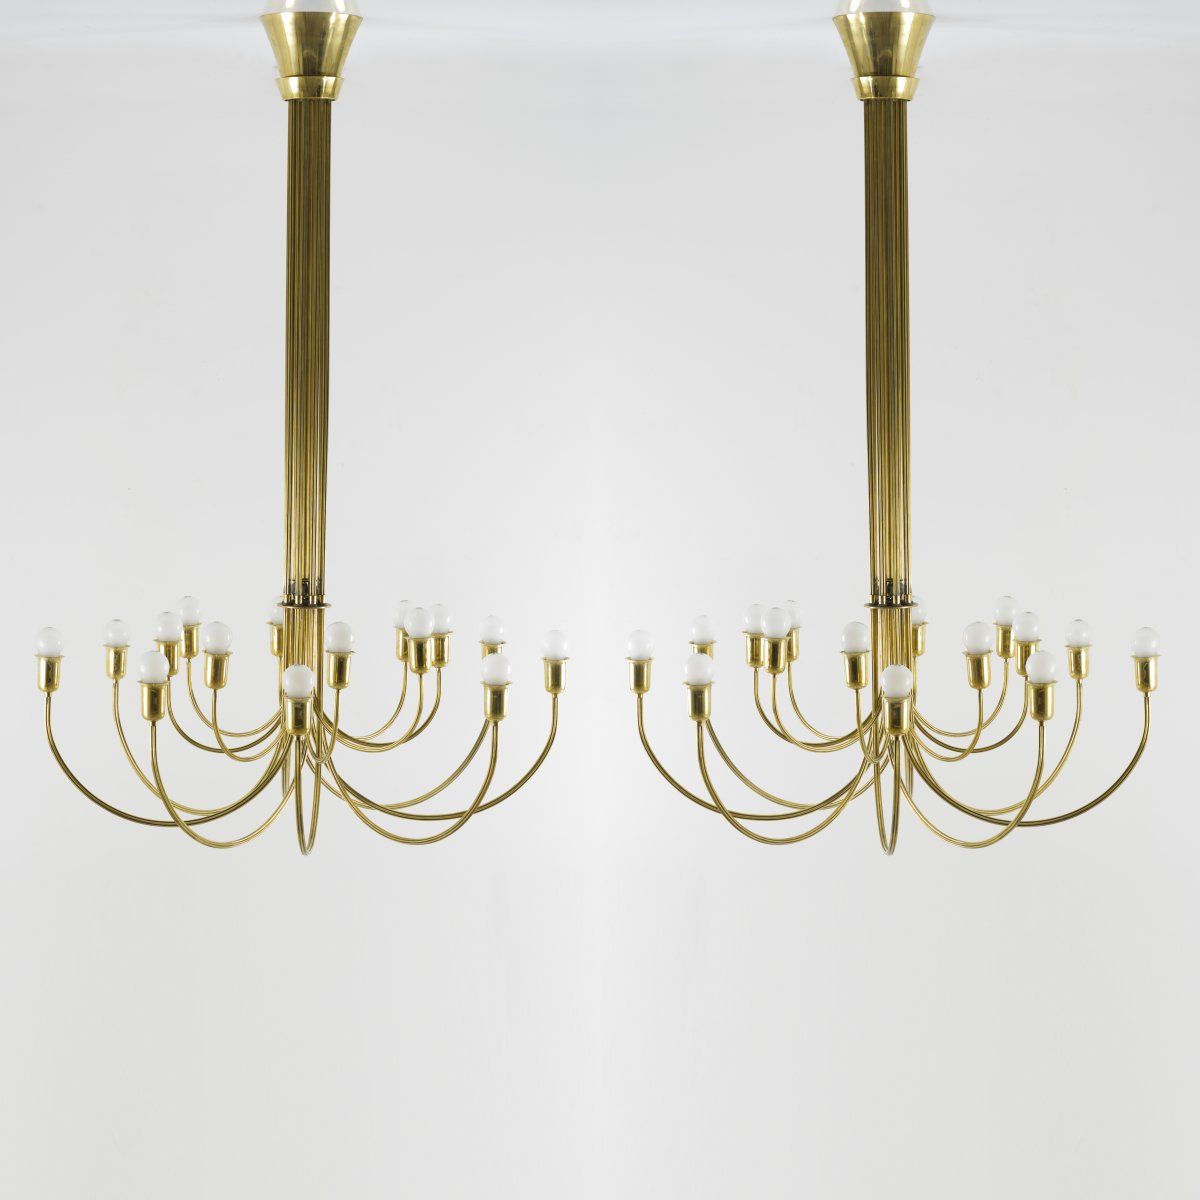 Null Germany, 2 ceiling lights, 1930s, H. 170 cm, D. 110 cm. Tubular brass, shee&hellip;